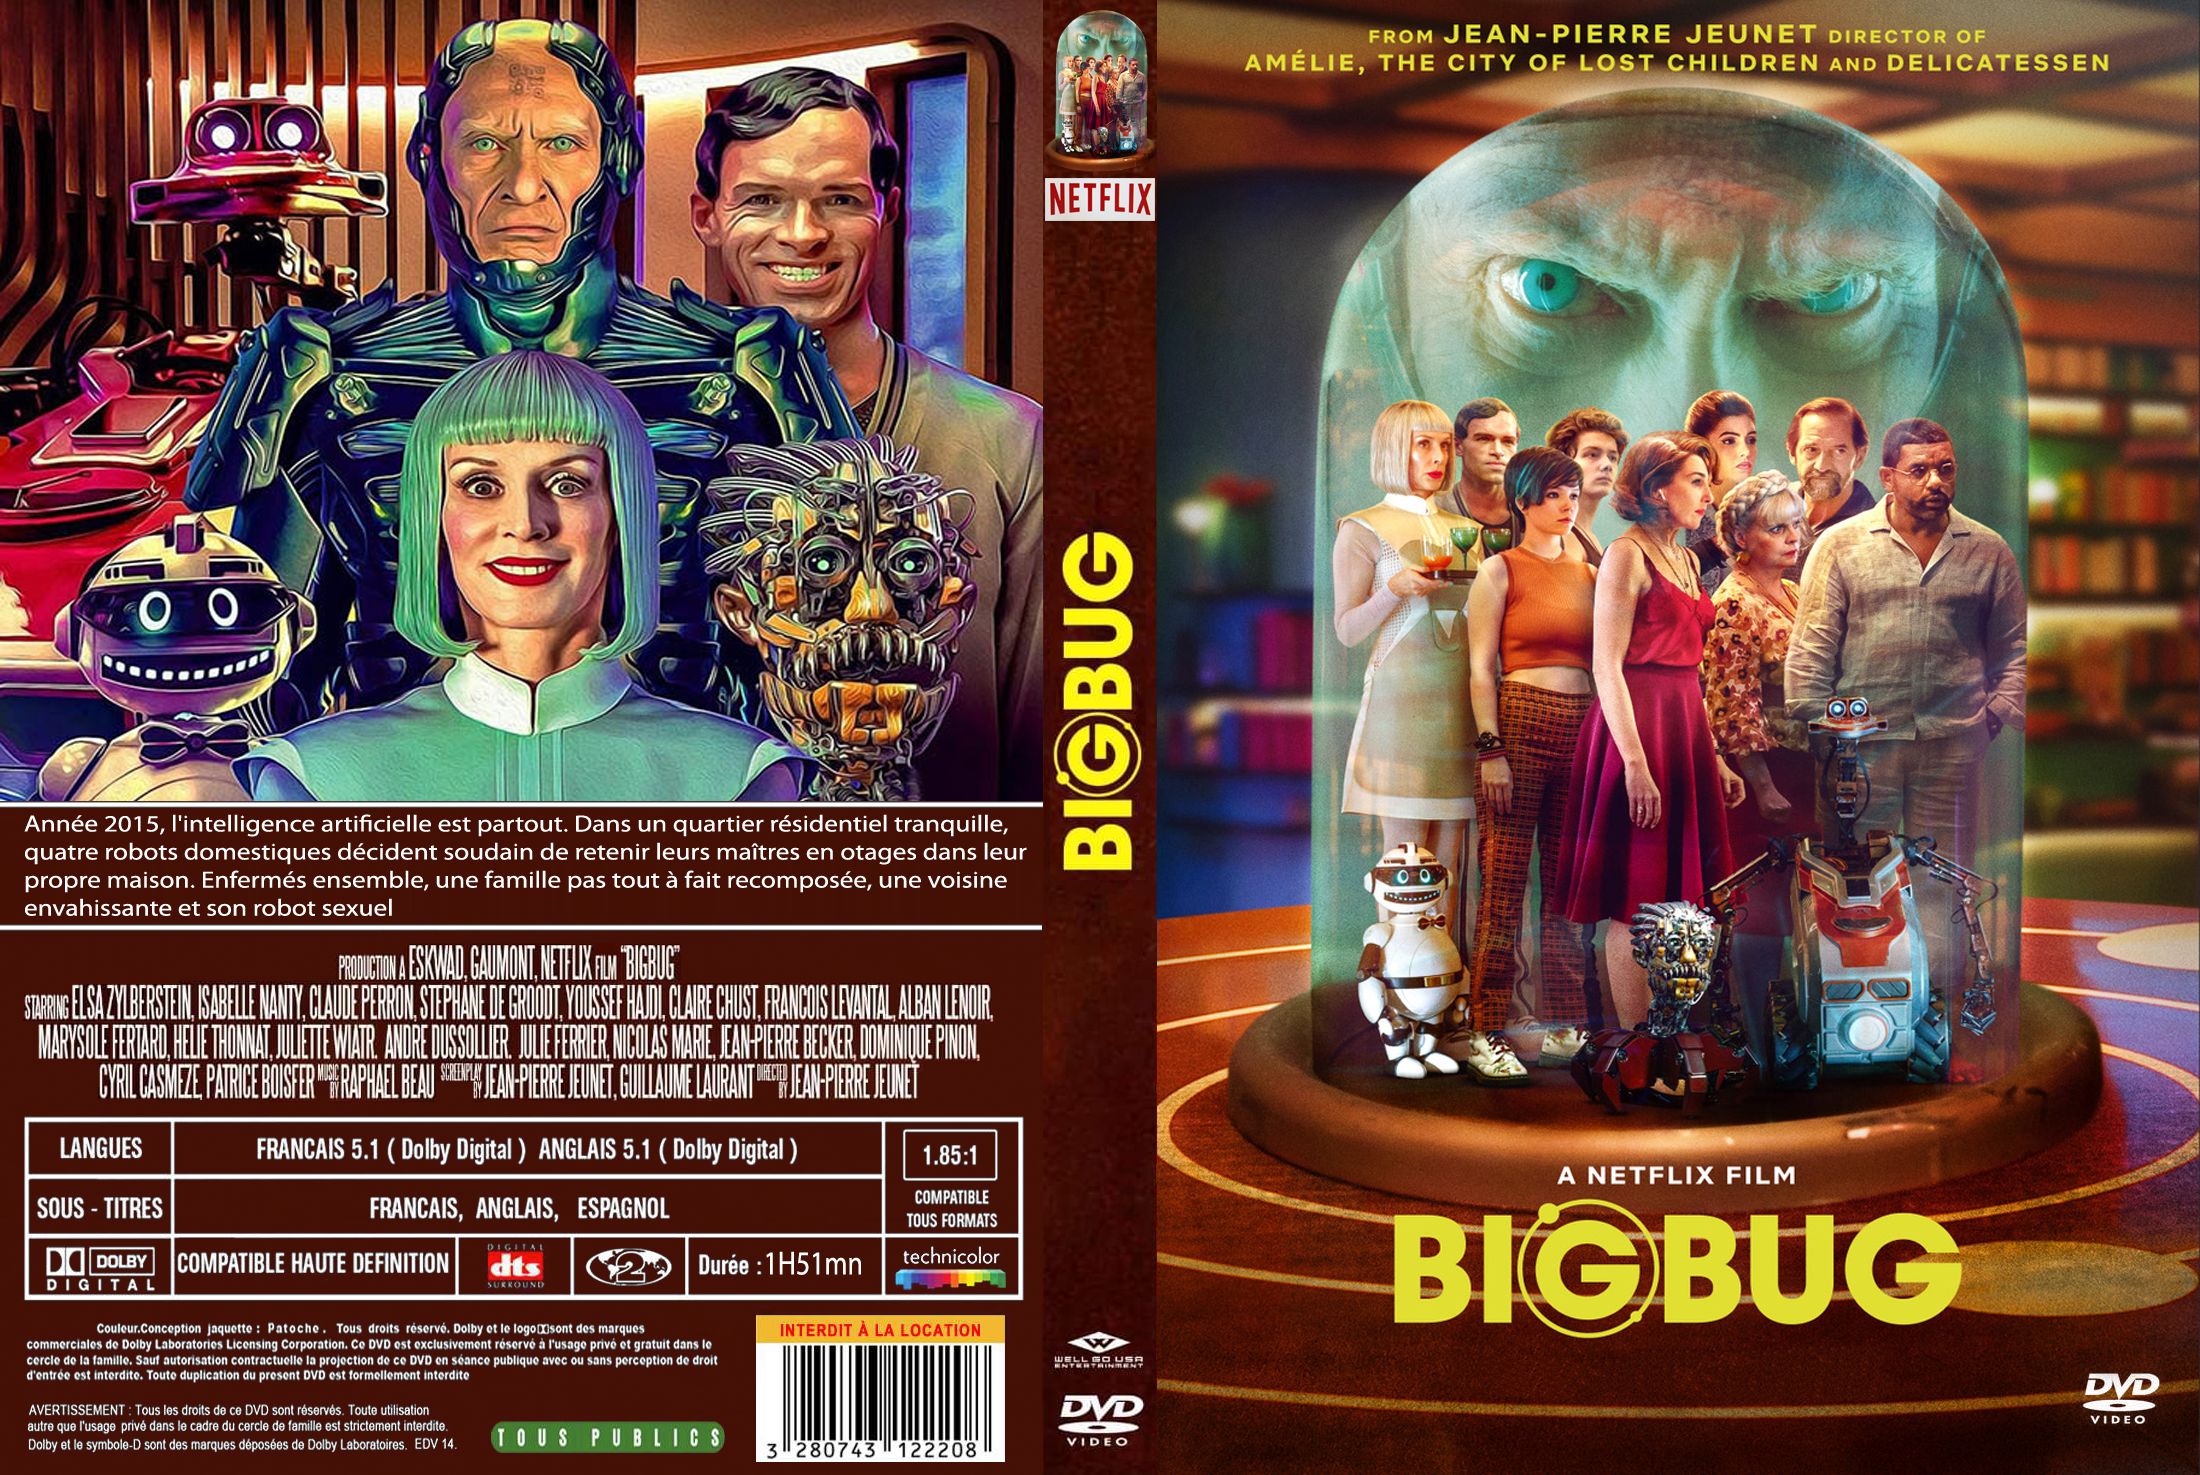 Jaquette DVD Bigbug custom